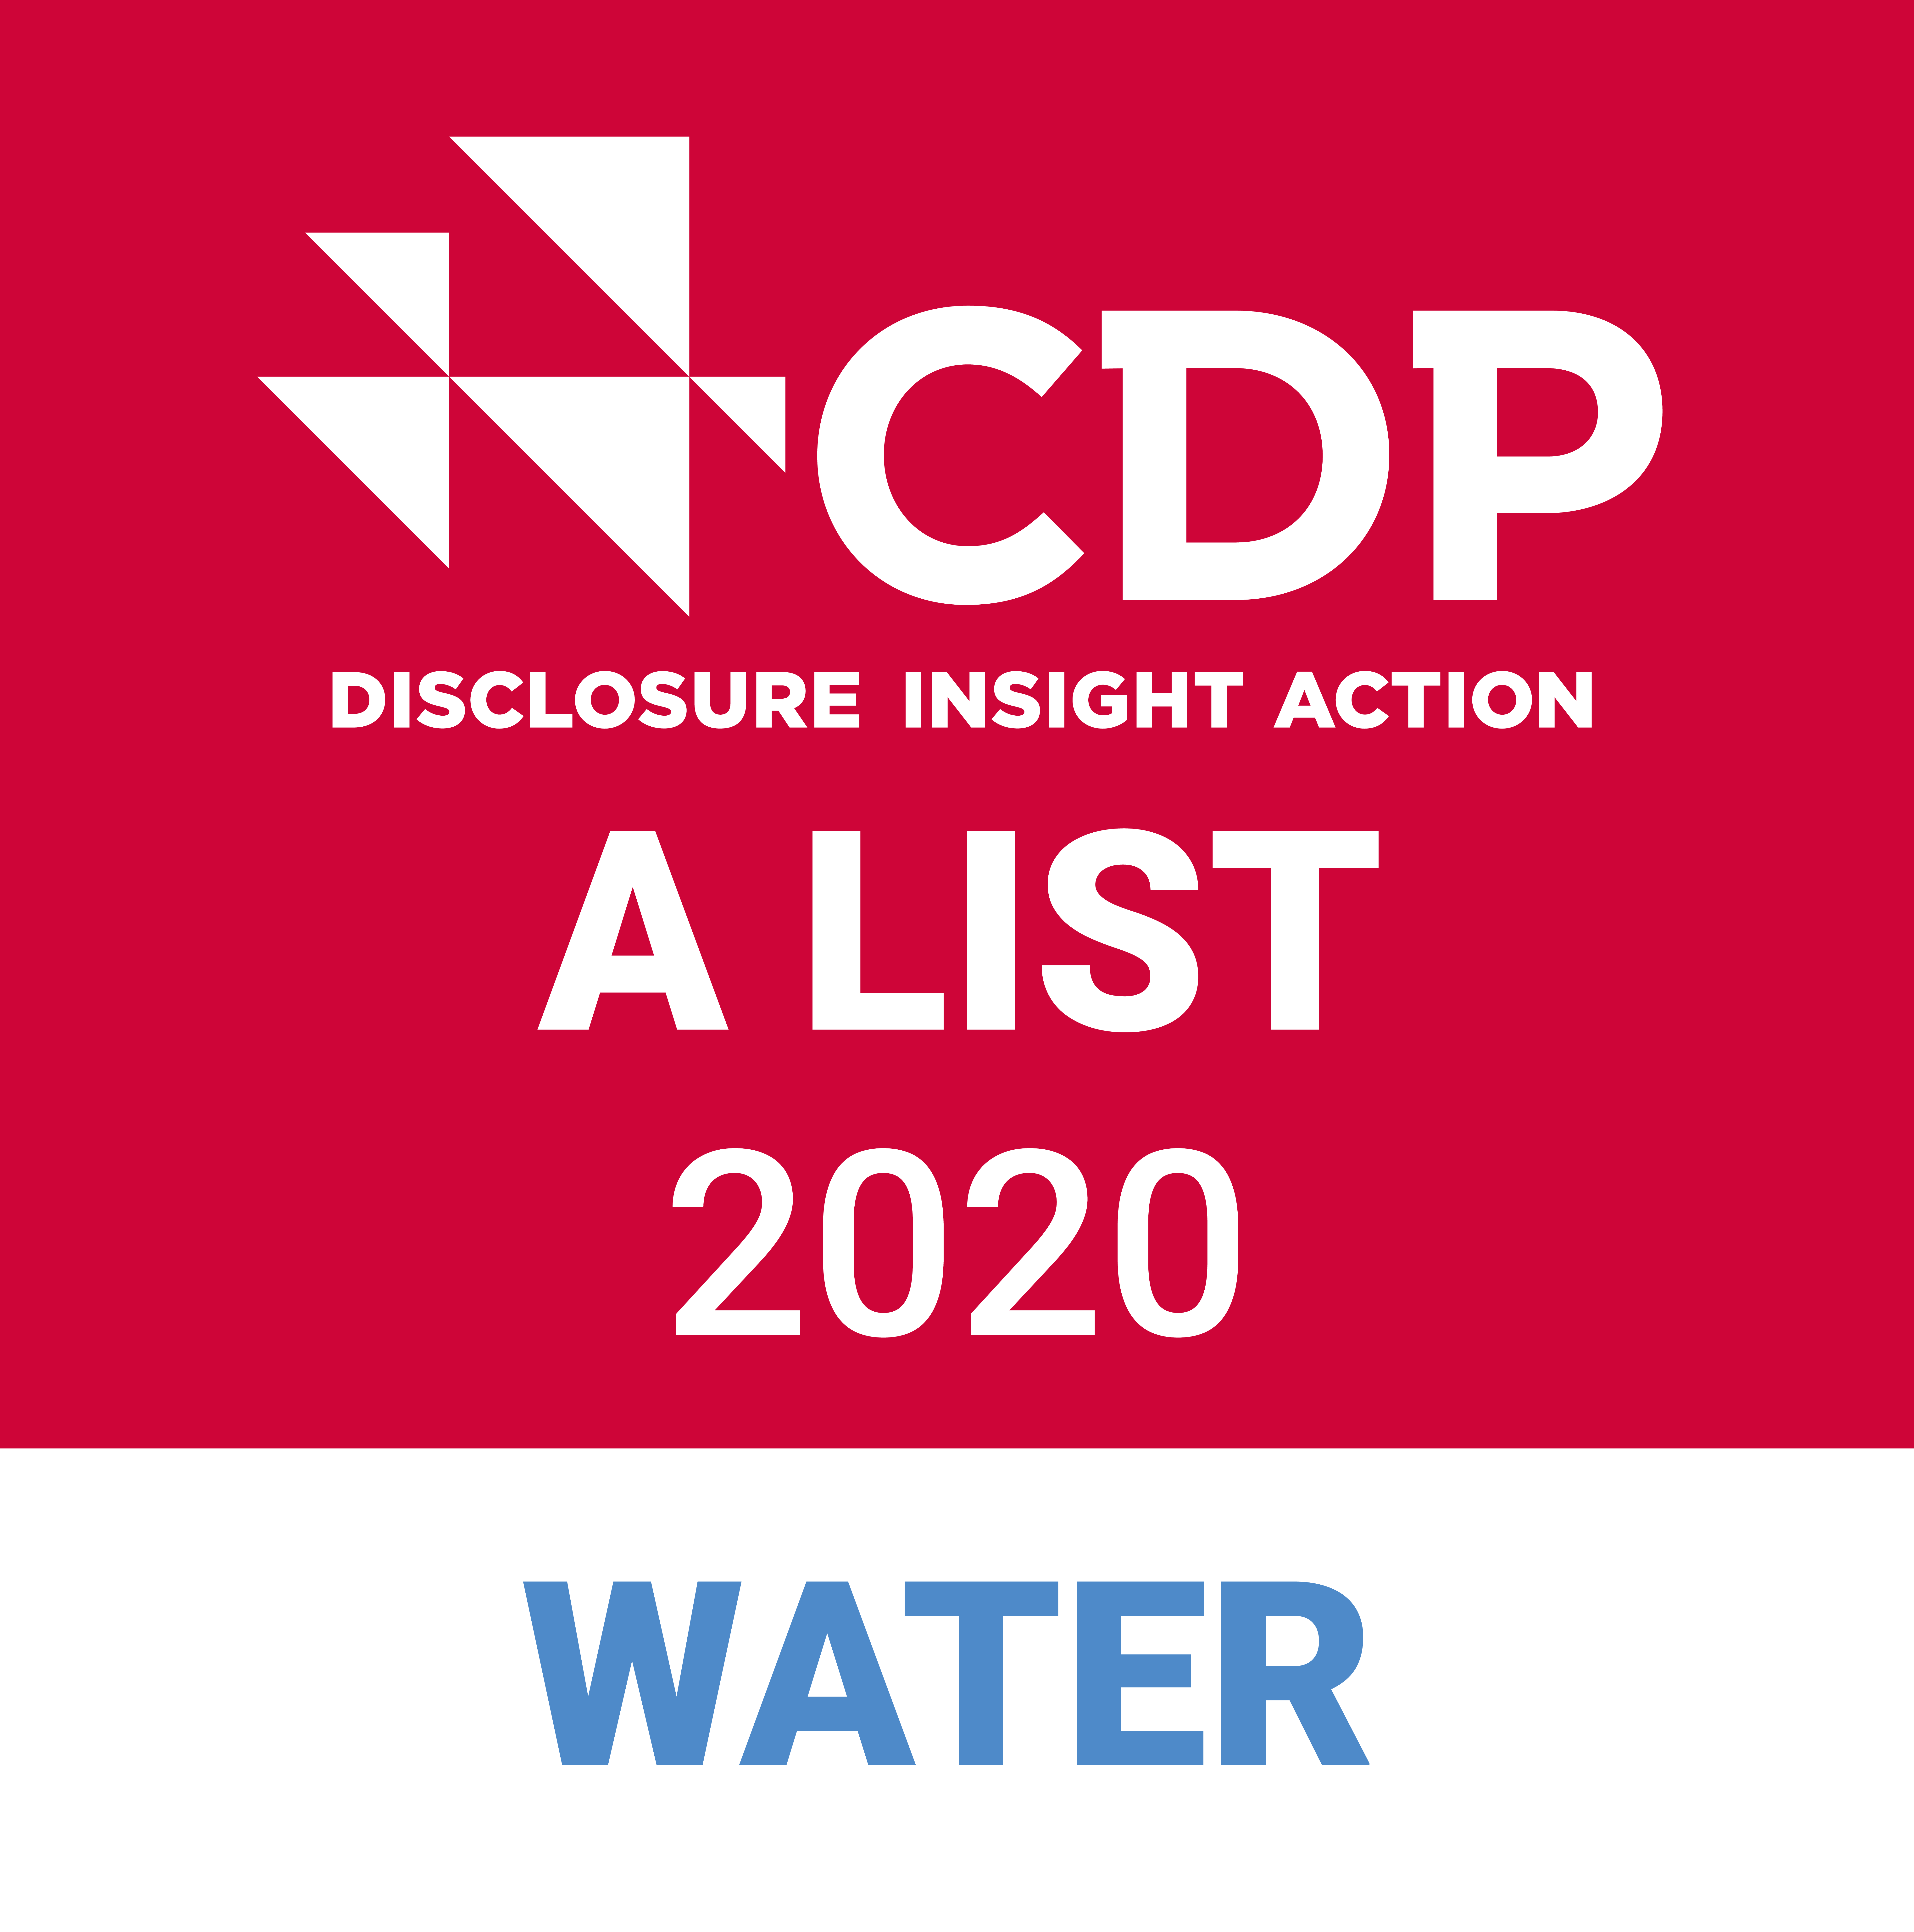 CDP a list 2020 water